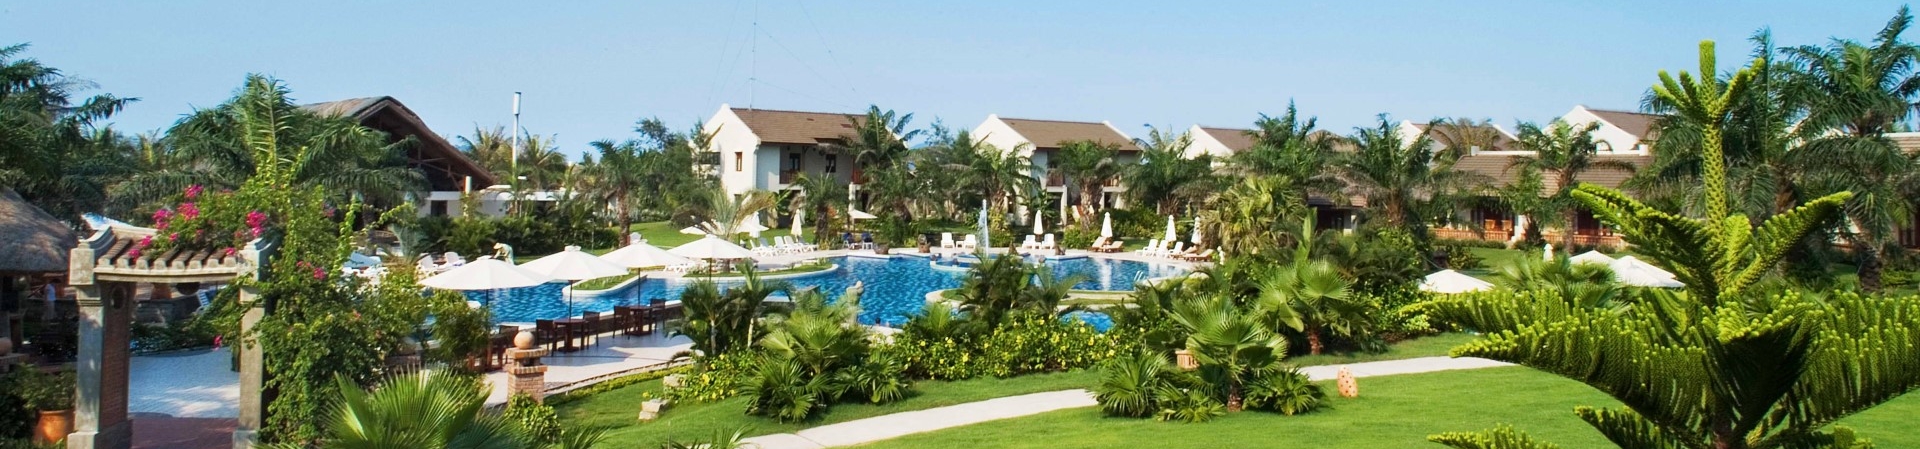 Image of Palm Garden Resort & Spa